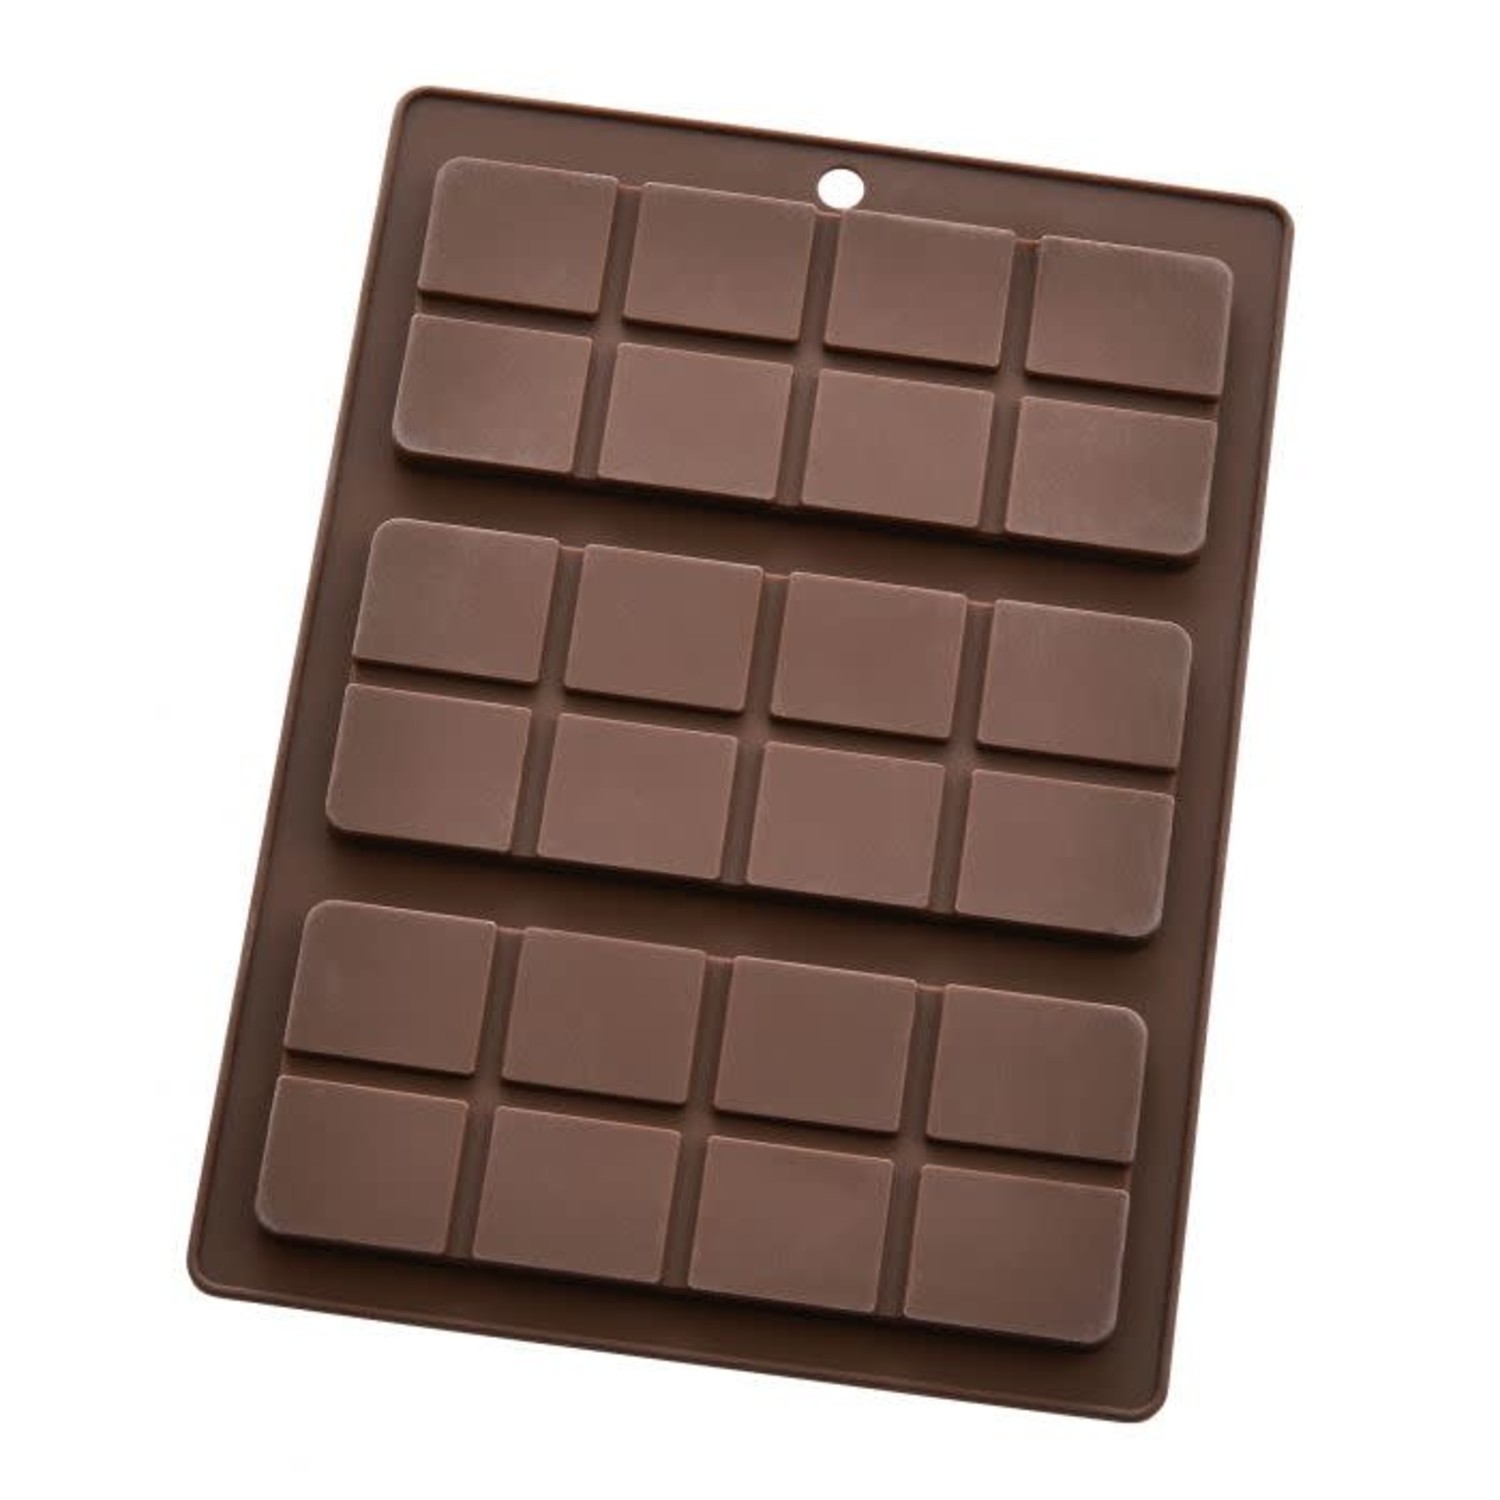 BITE SIZE Chocolate Bar Silicone Mold 